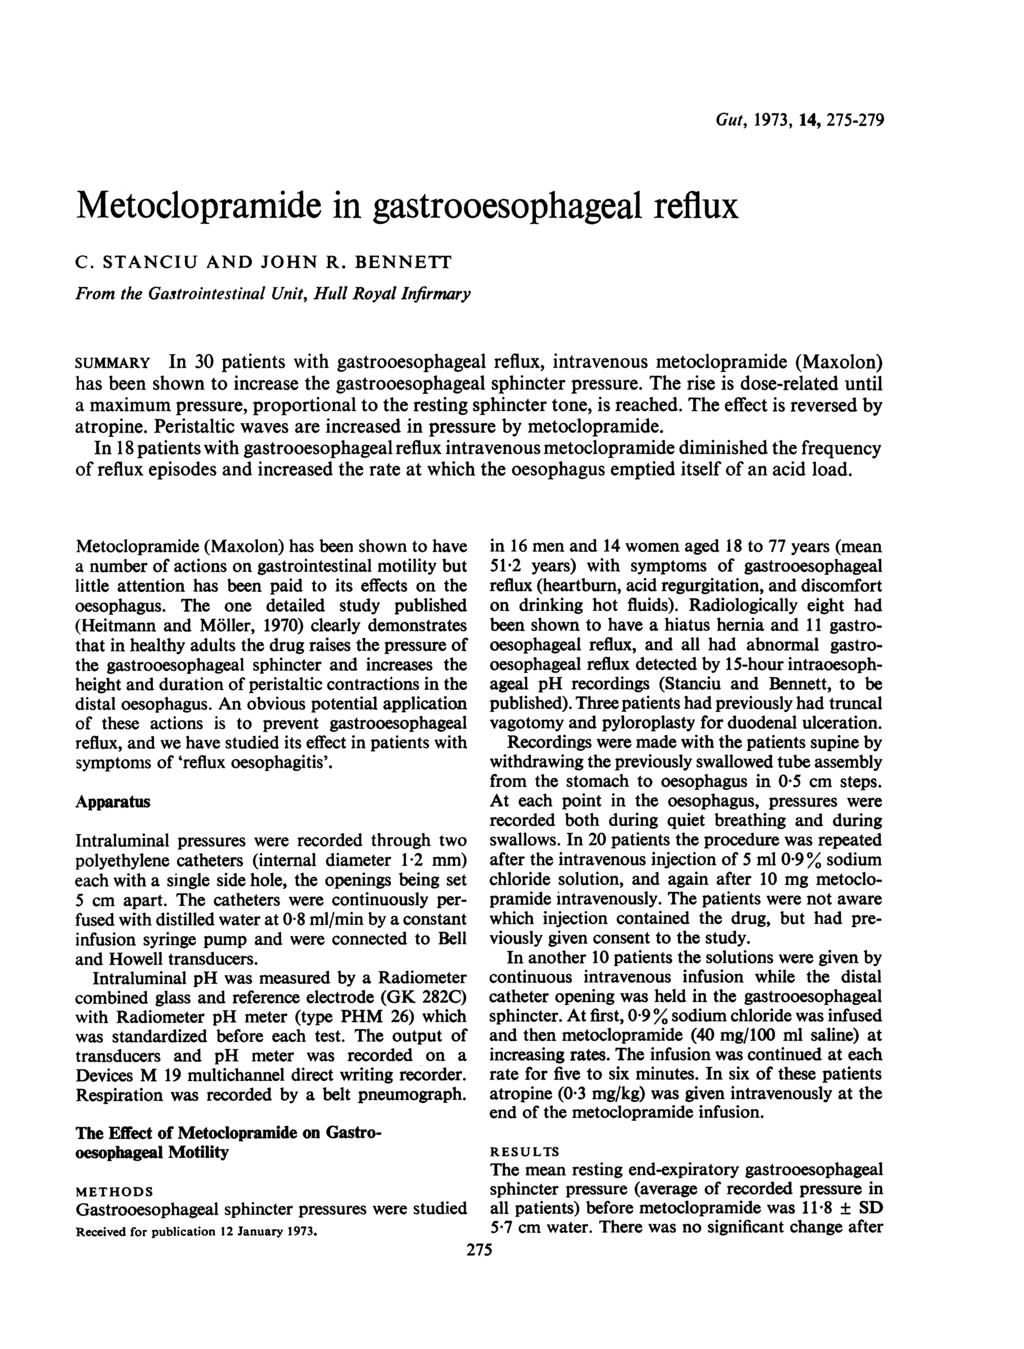 Metoclopramide in gastrooesophageal reflux C. STANCIU AND JOHN R.